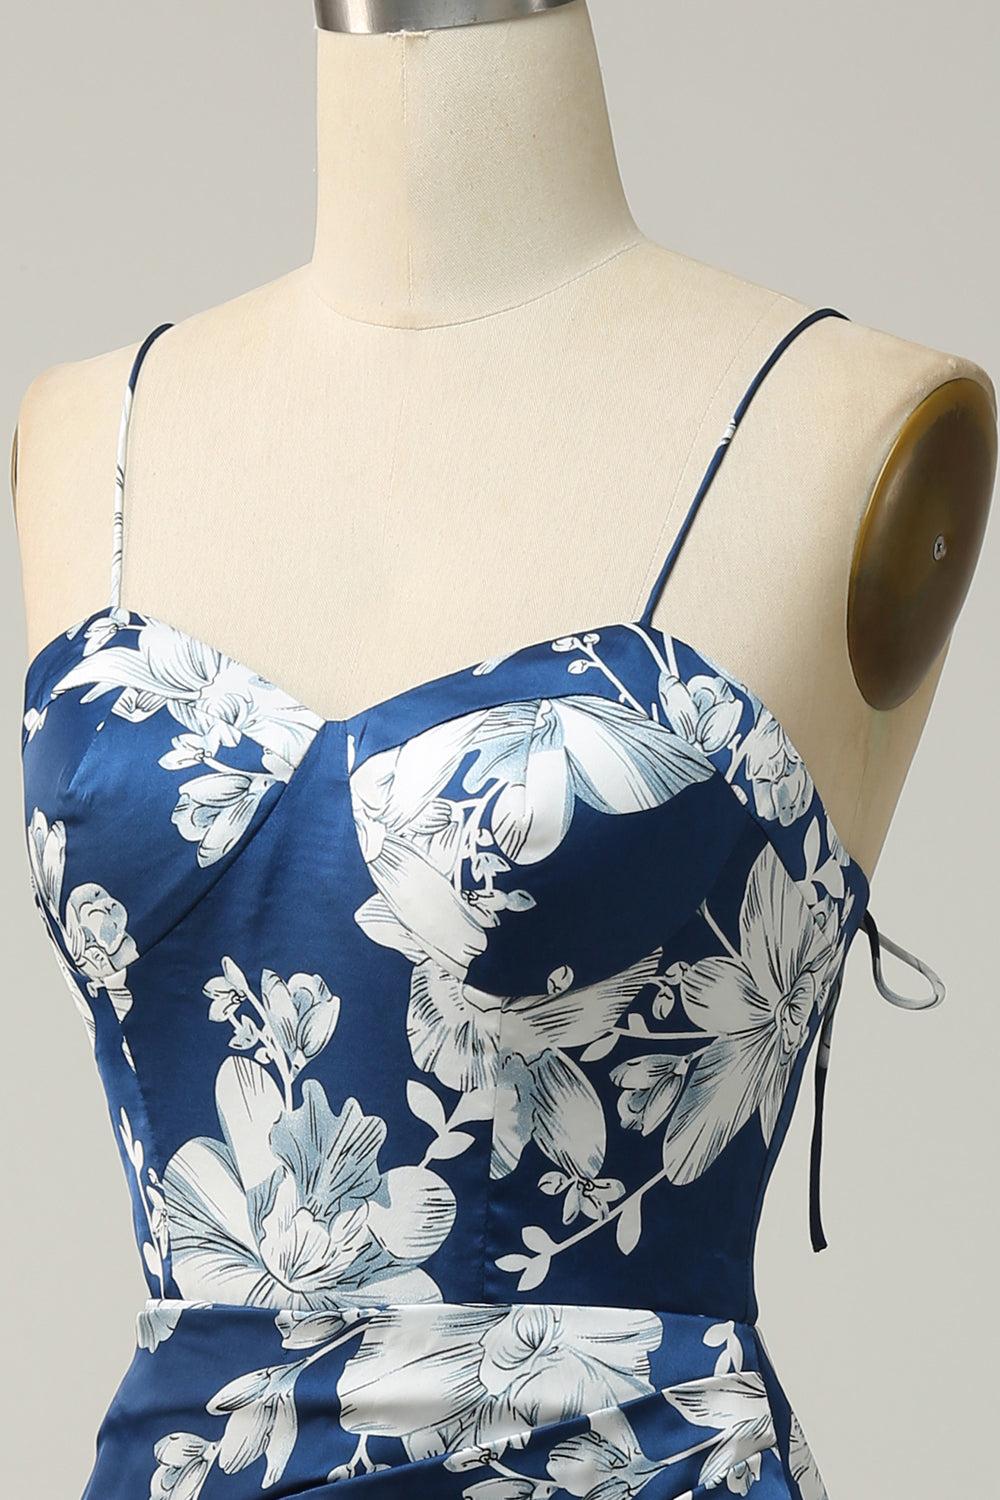 Ink Blue Floral Tea-Length Bridesmaid Dress